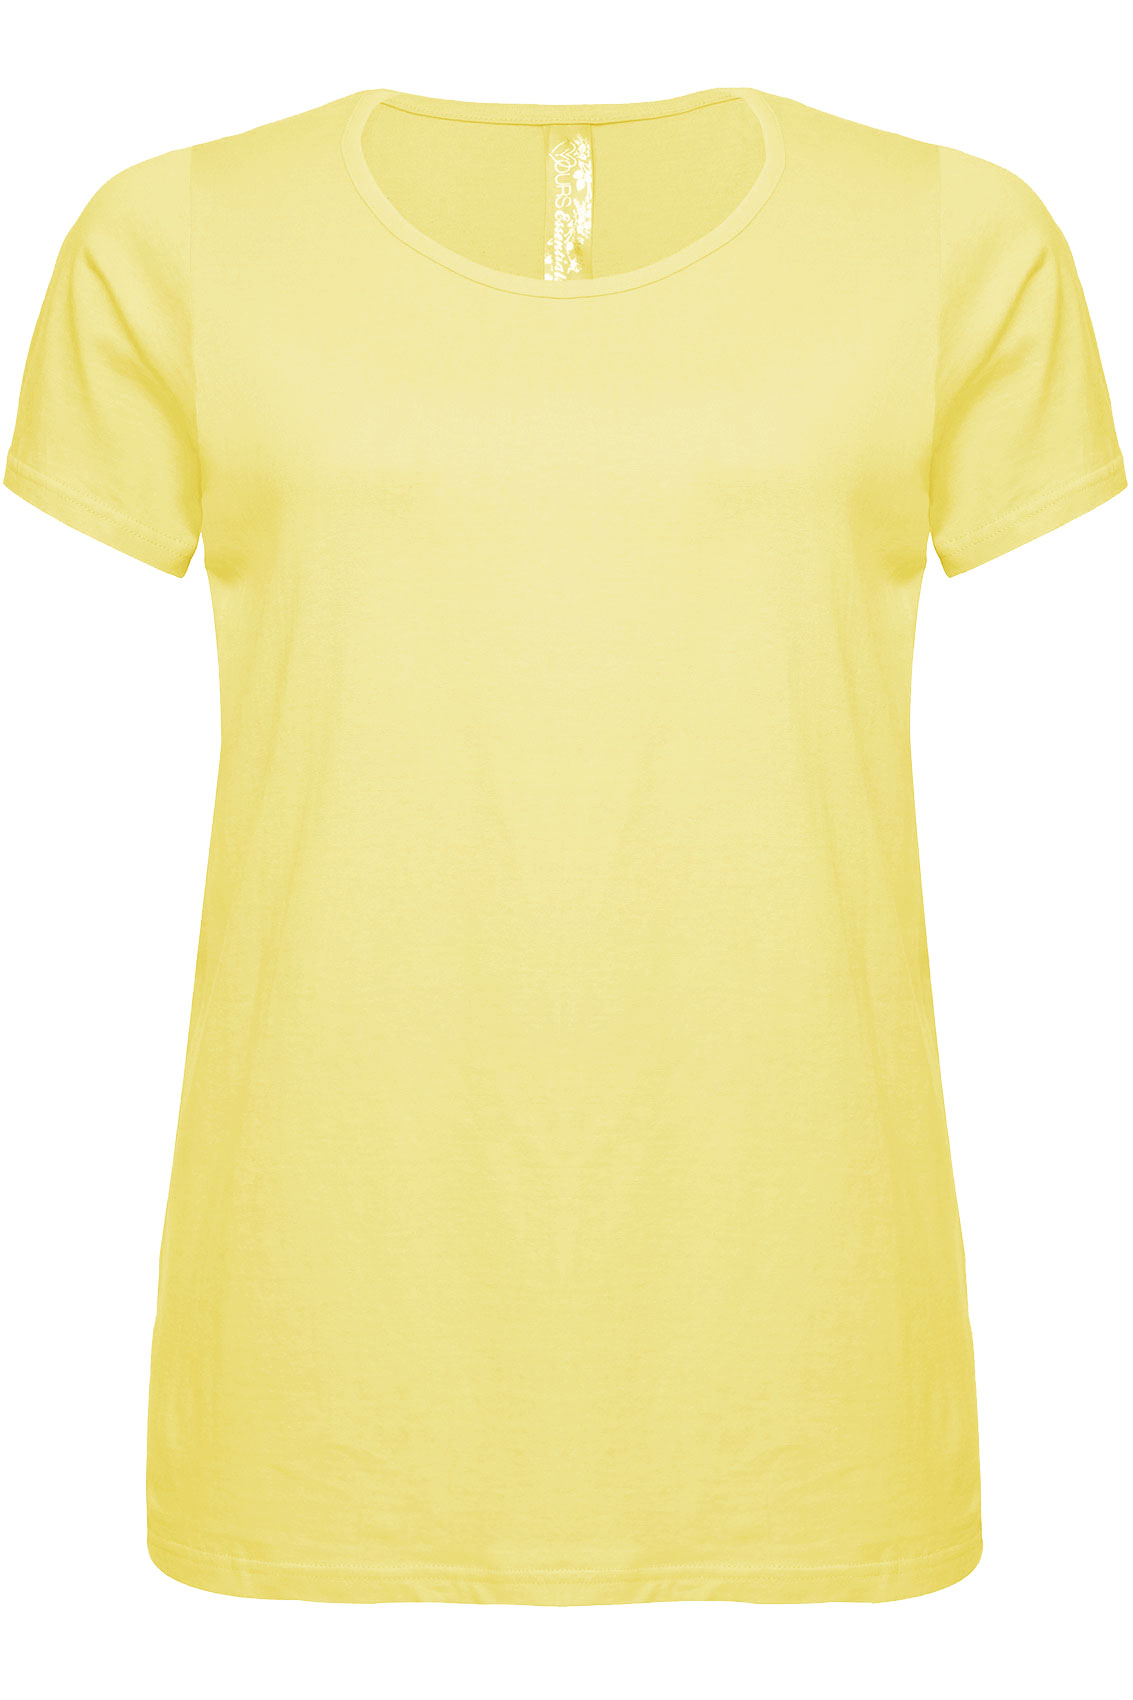 Yellow Plain Basic Scoop Neck T-shirt plus size 16,18,20,22,24,26,28,30,32